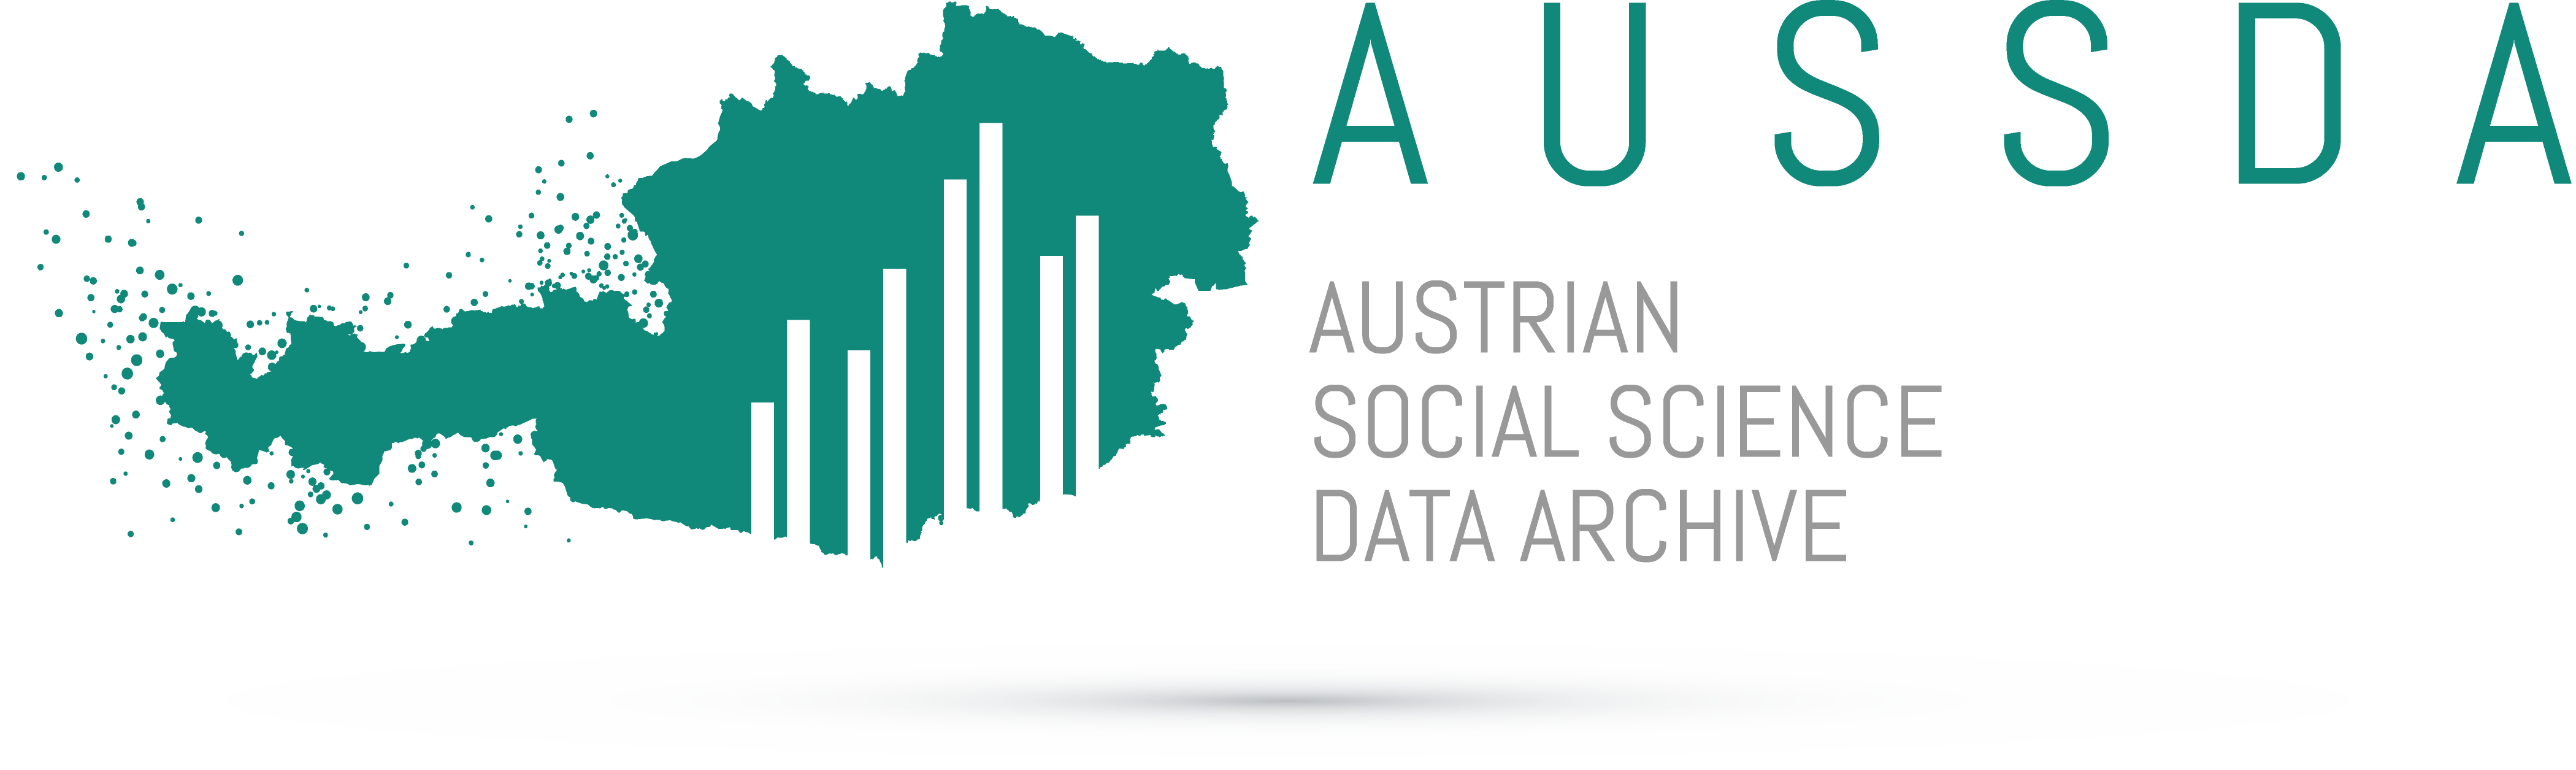 The Austrian Social Science Data Archive